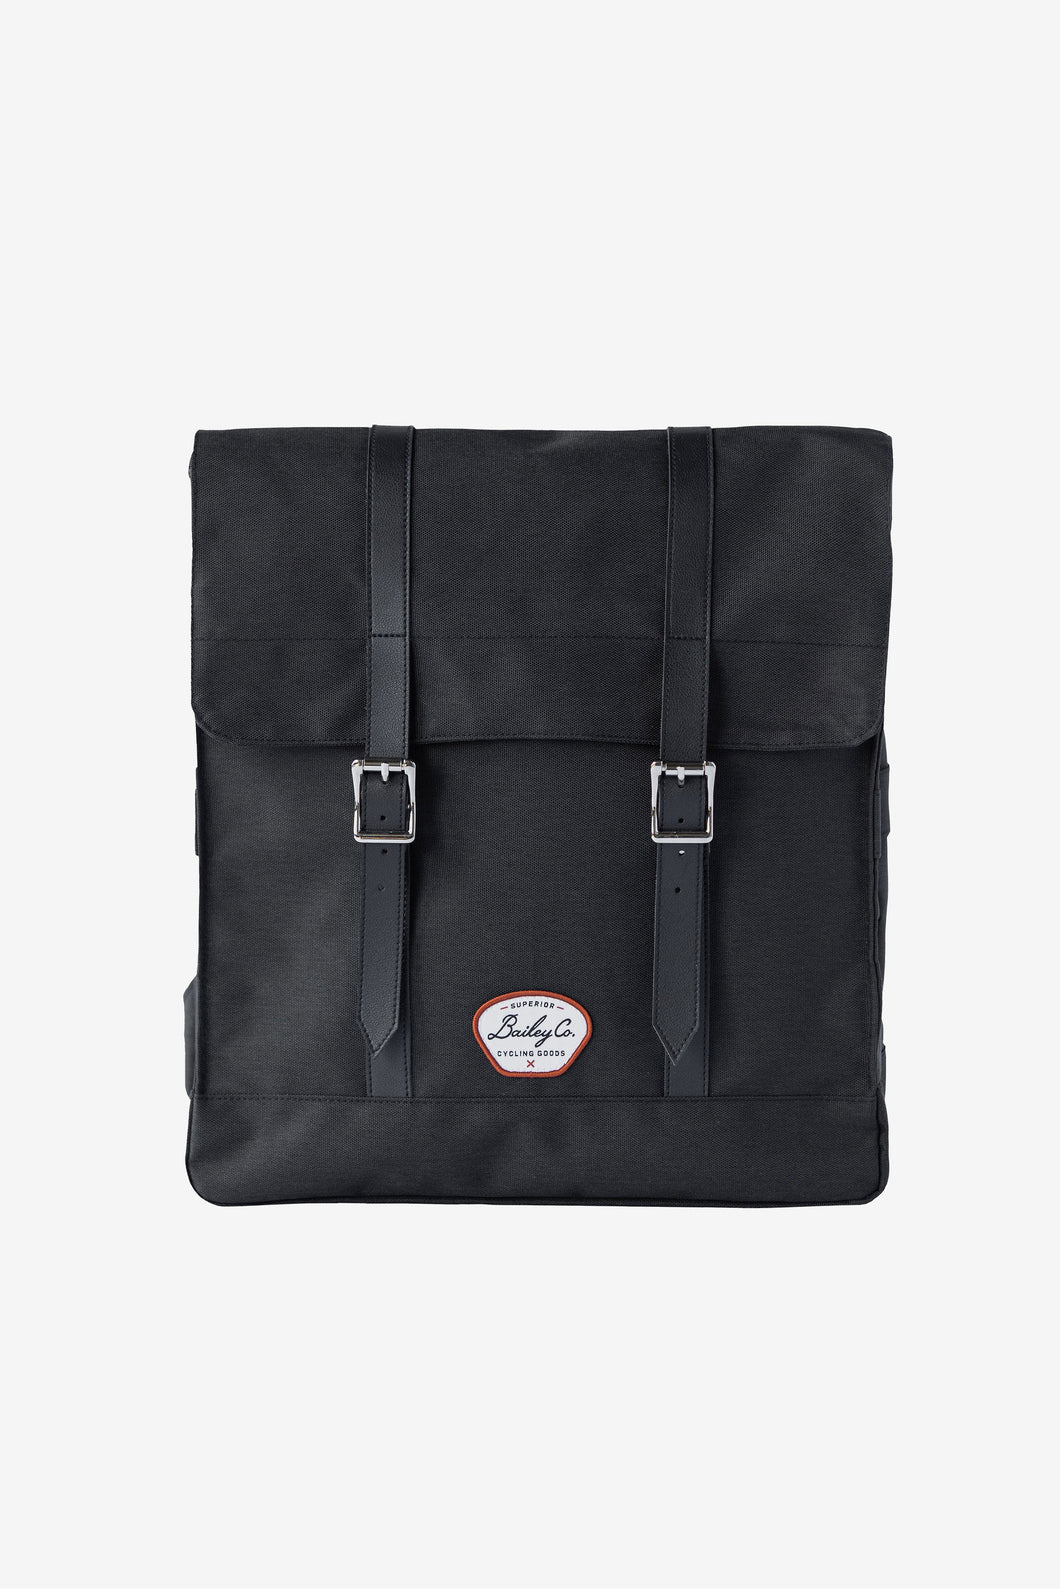 Bailey Co. Richmond | Convertible Pannier Backpack